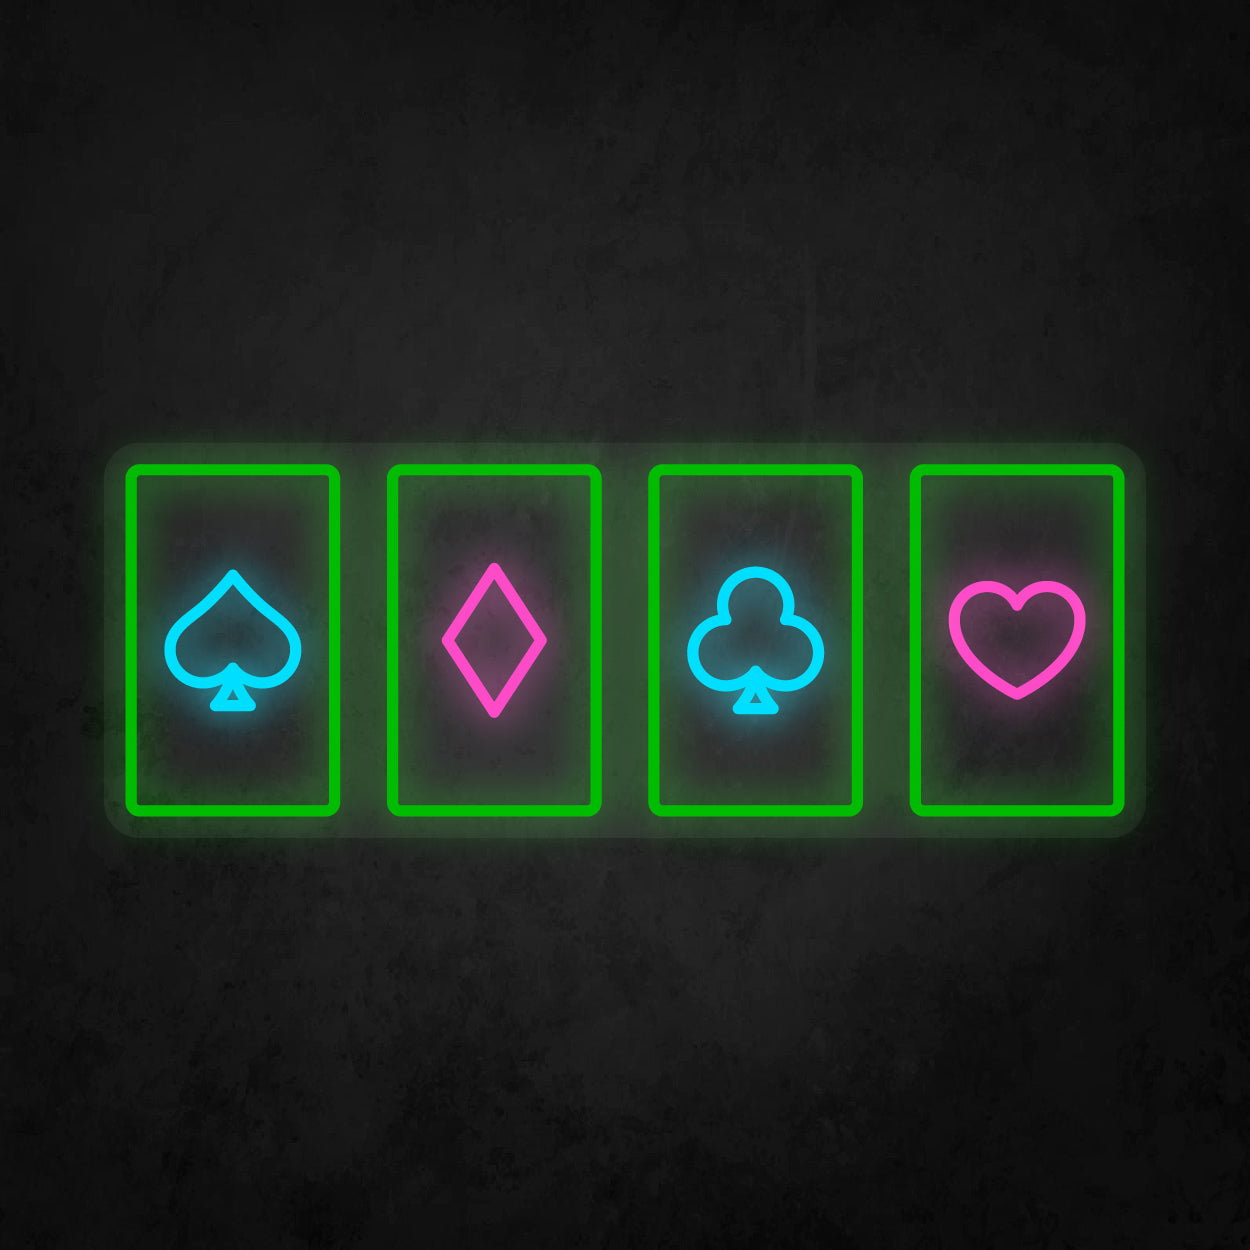 LED Neon Sign - Poker Card Horizontal Layout